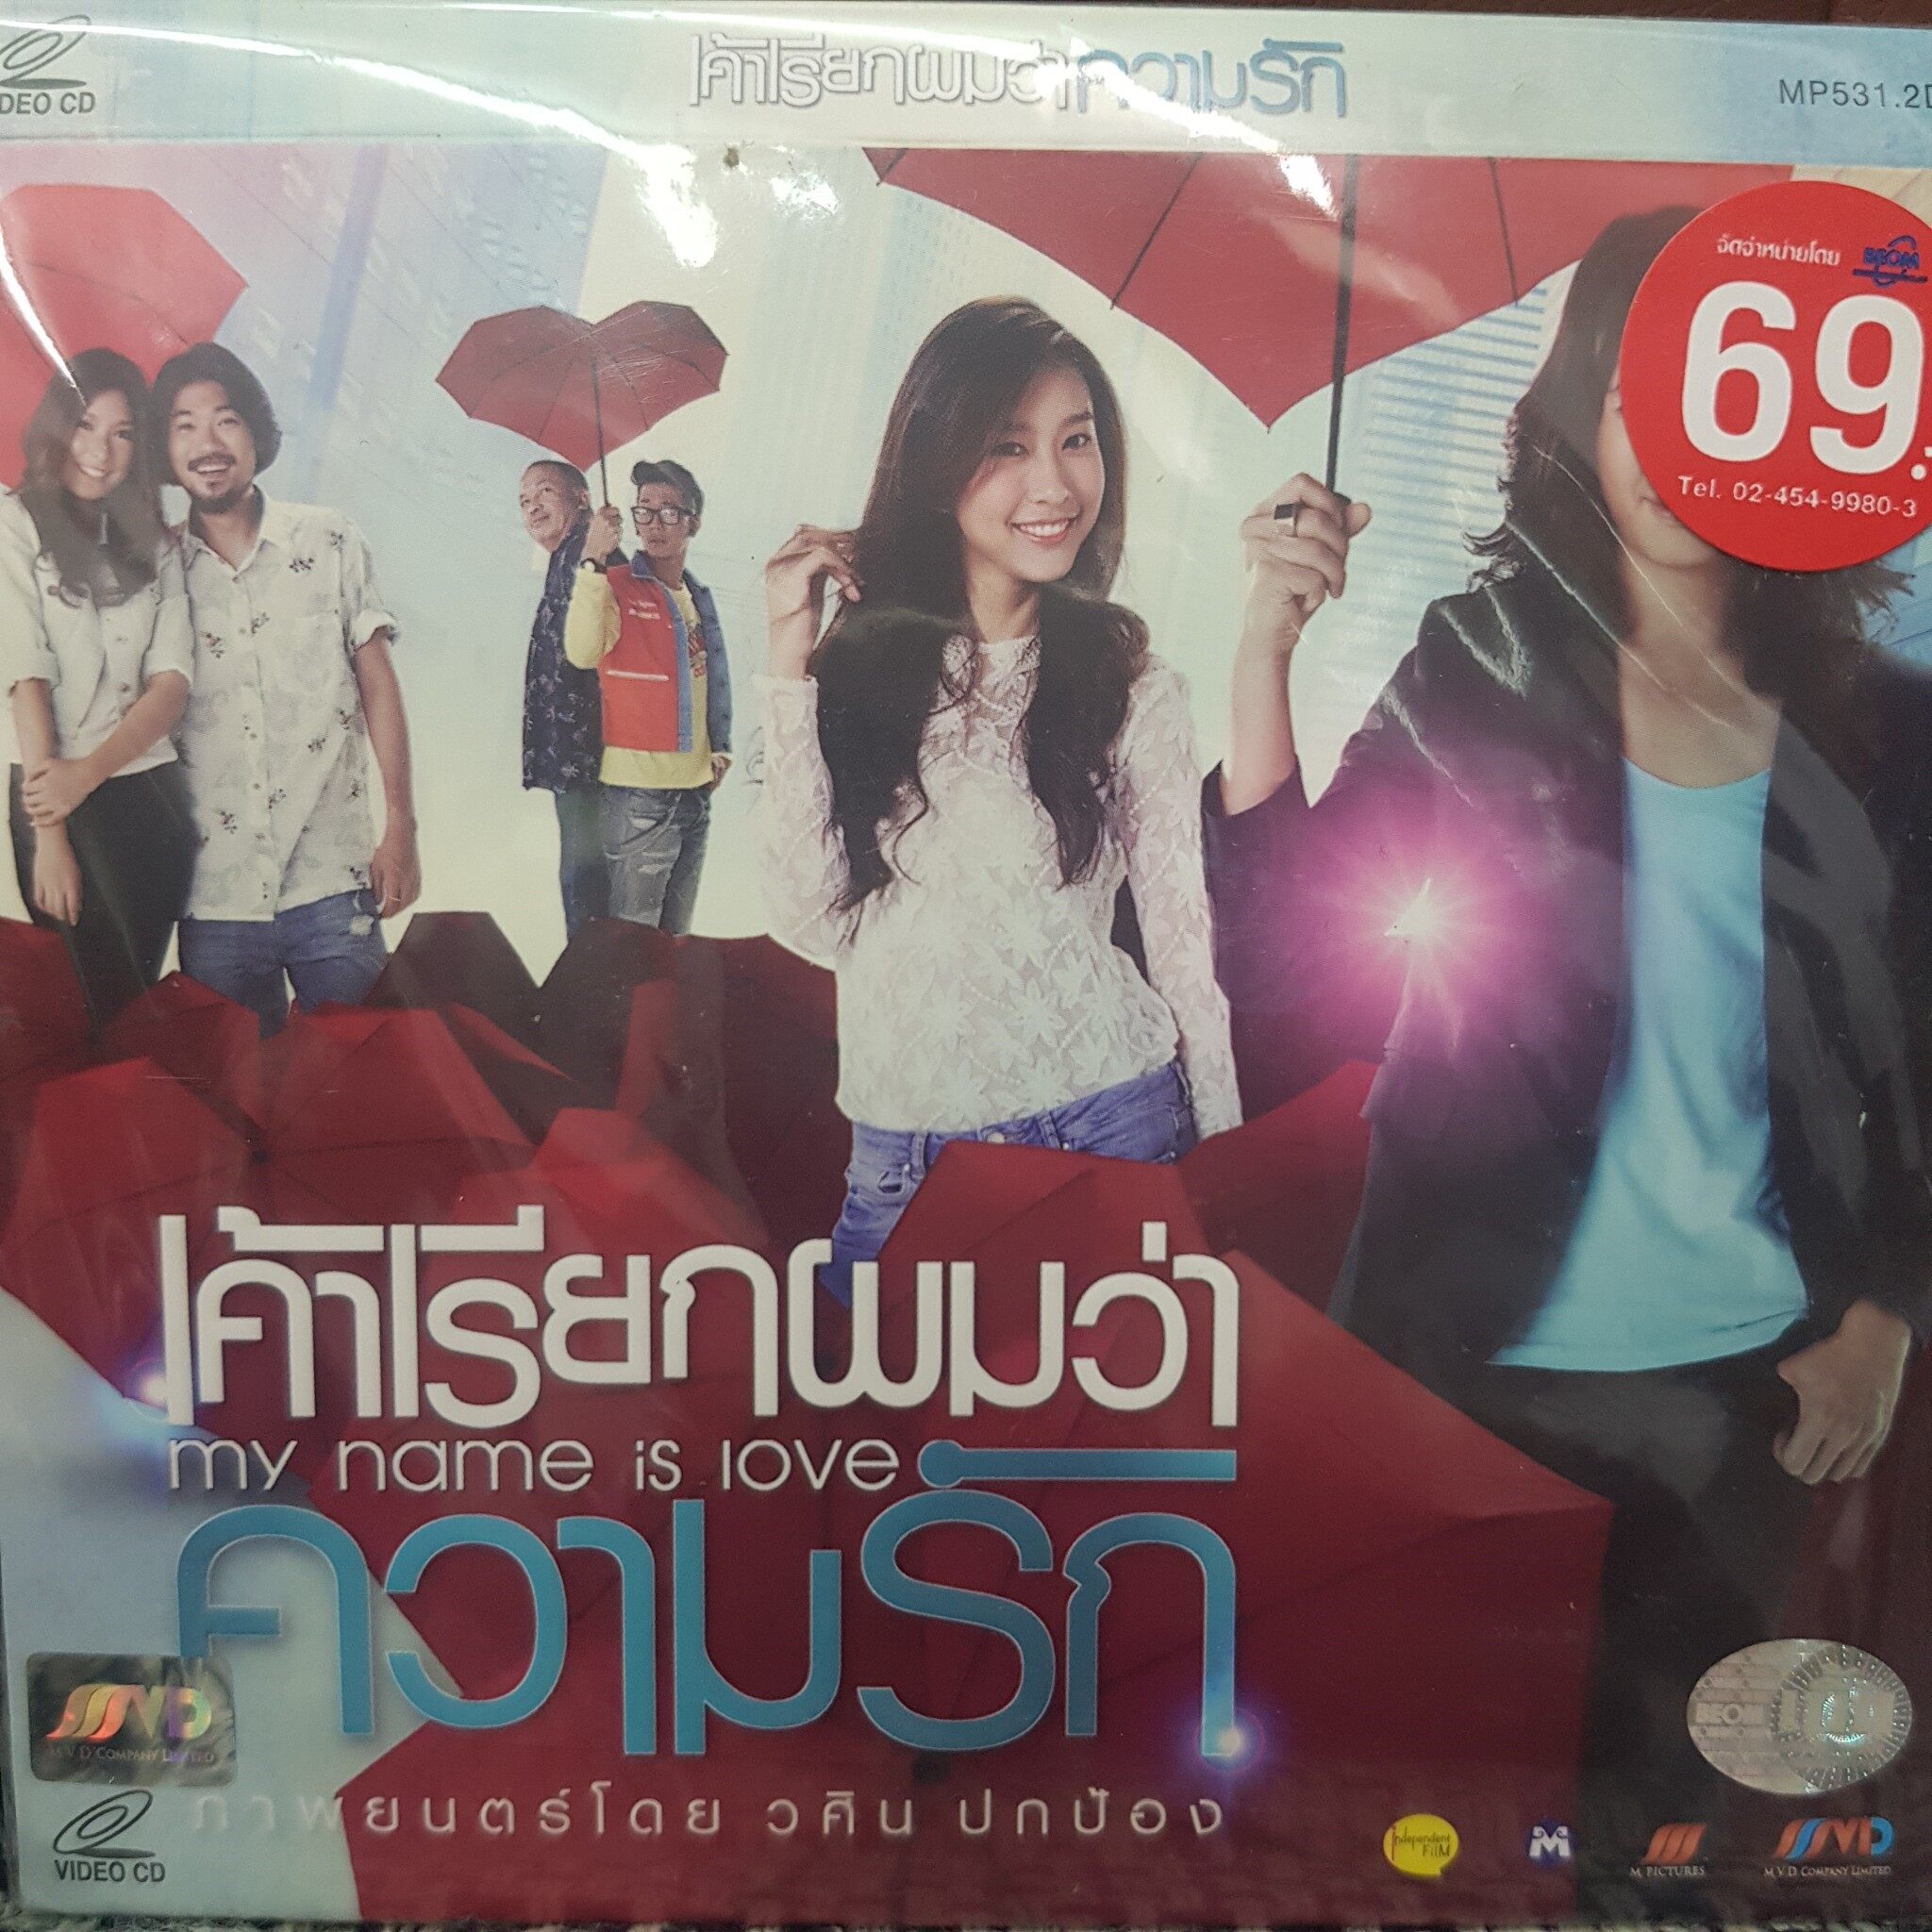 VCDหนัง เค้าเรียกผมว่า ความรัก พากย์ไทย (SBYVCD2020-เค้าเรียกผมว่าความรัก) โรแมนติก แผ่นหนัง สะสม หนังโรงภาพยนตร์ ภาพยนตร์ หนังไทยเก่า หนัง งาน2020 cinema vcd วีซีดี STARMART